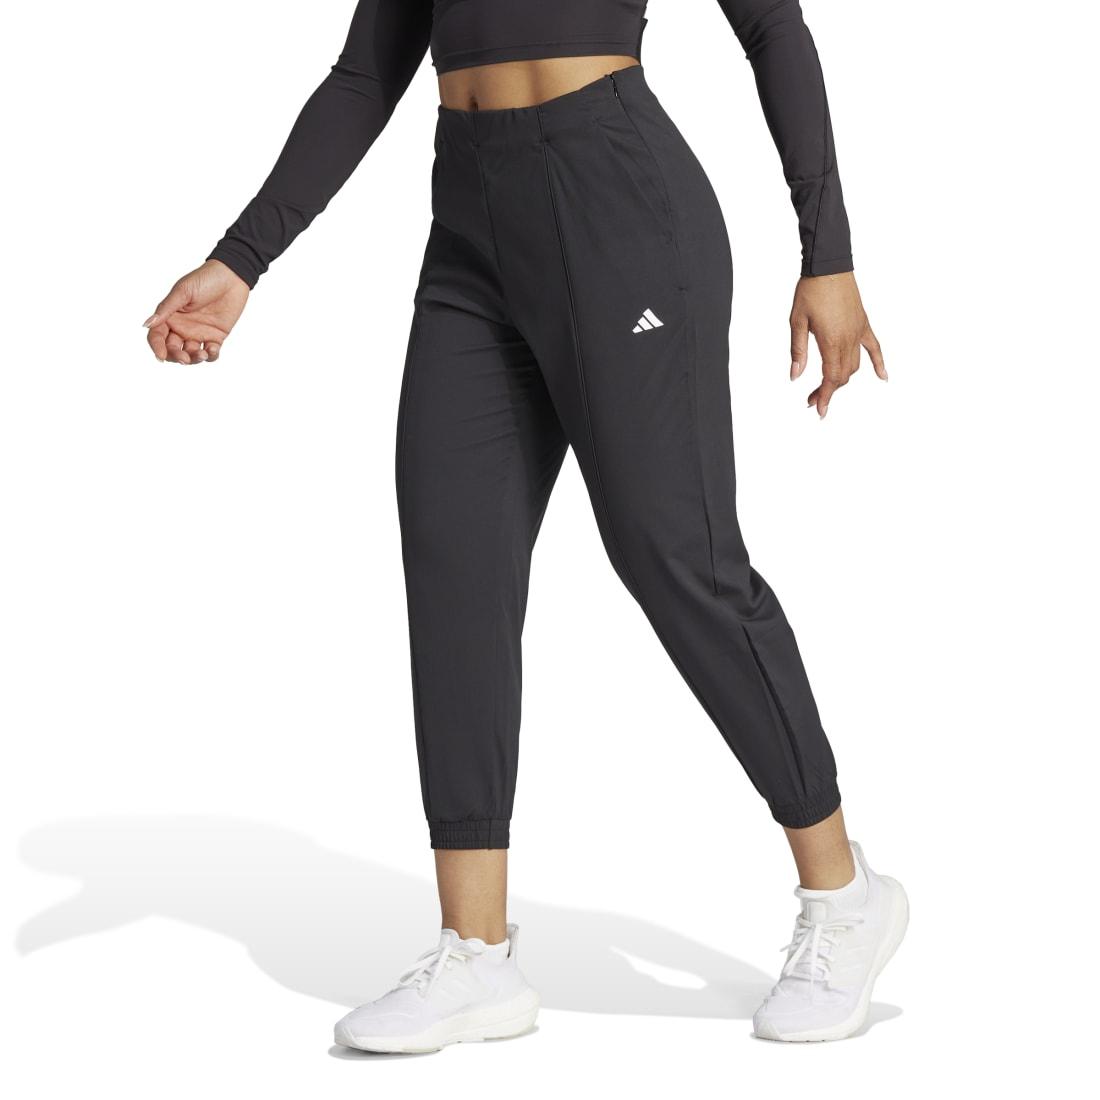 adidas Track Pants Women XS (4-6) Black Ankle Zip APU002 Pockets EUC | eBay